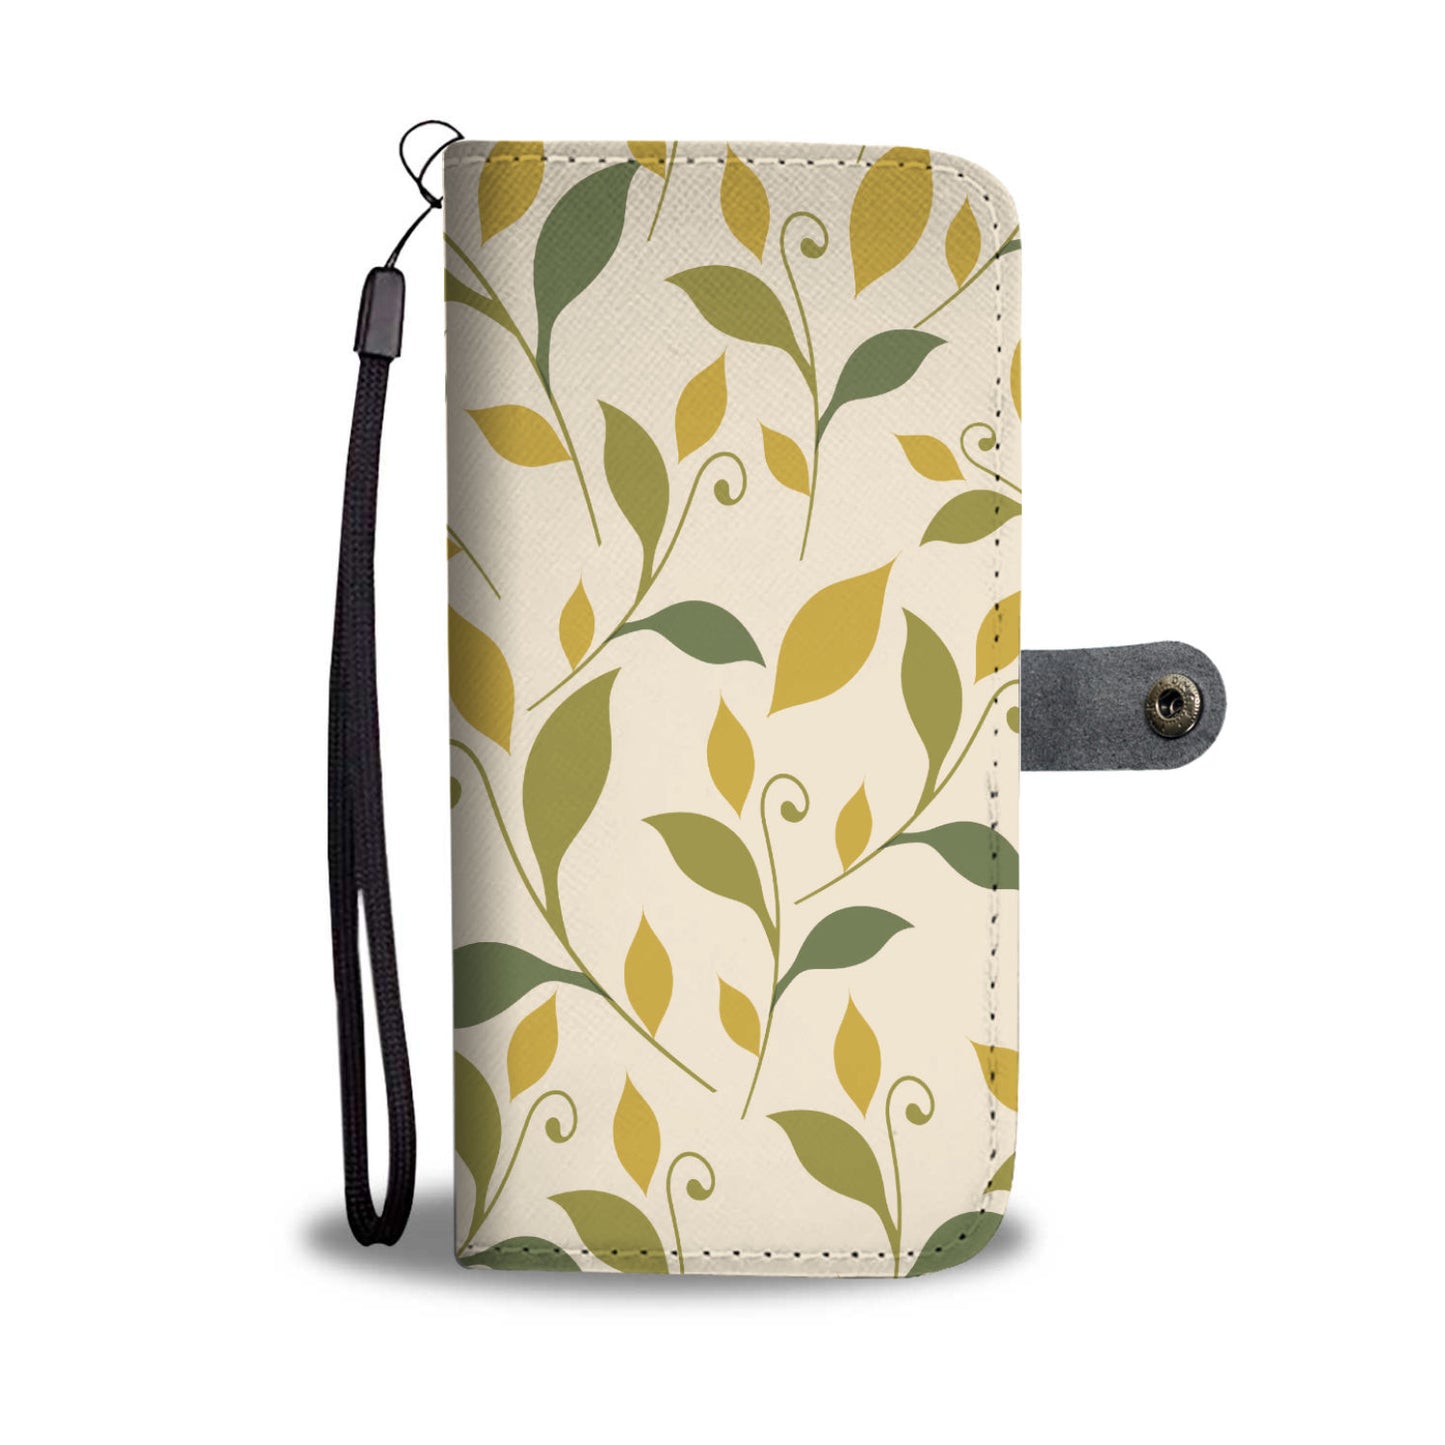 Floral & Butter Phone Wallet Case